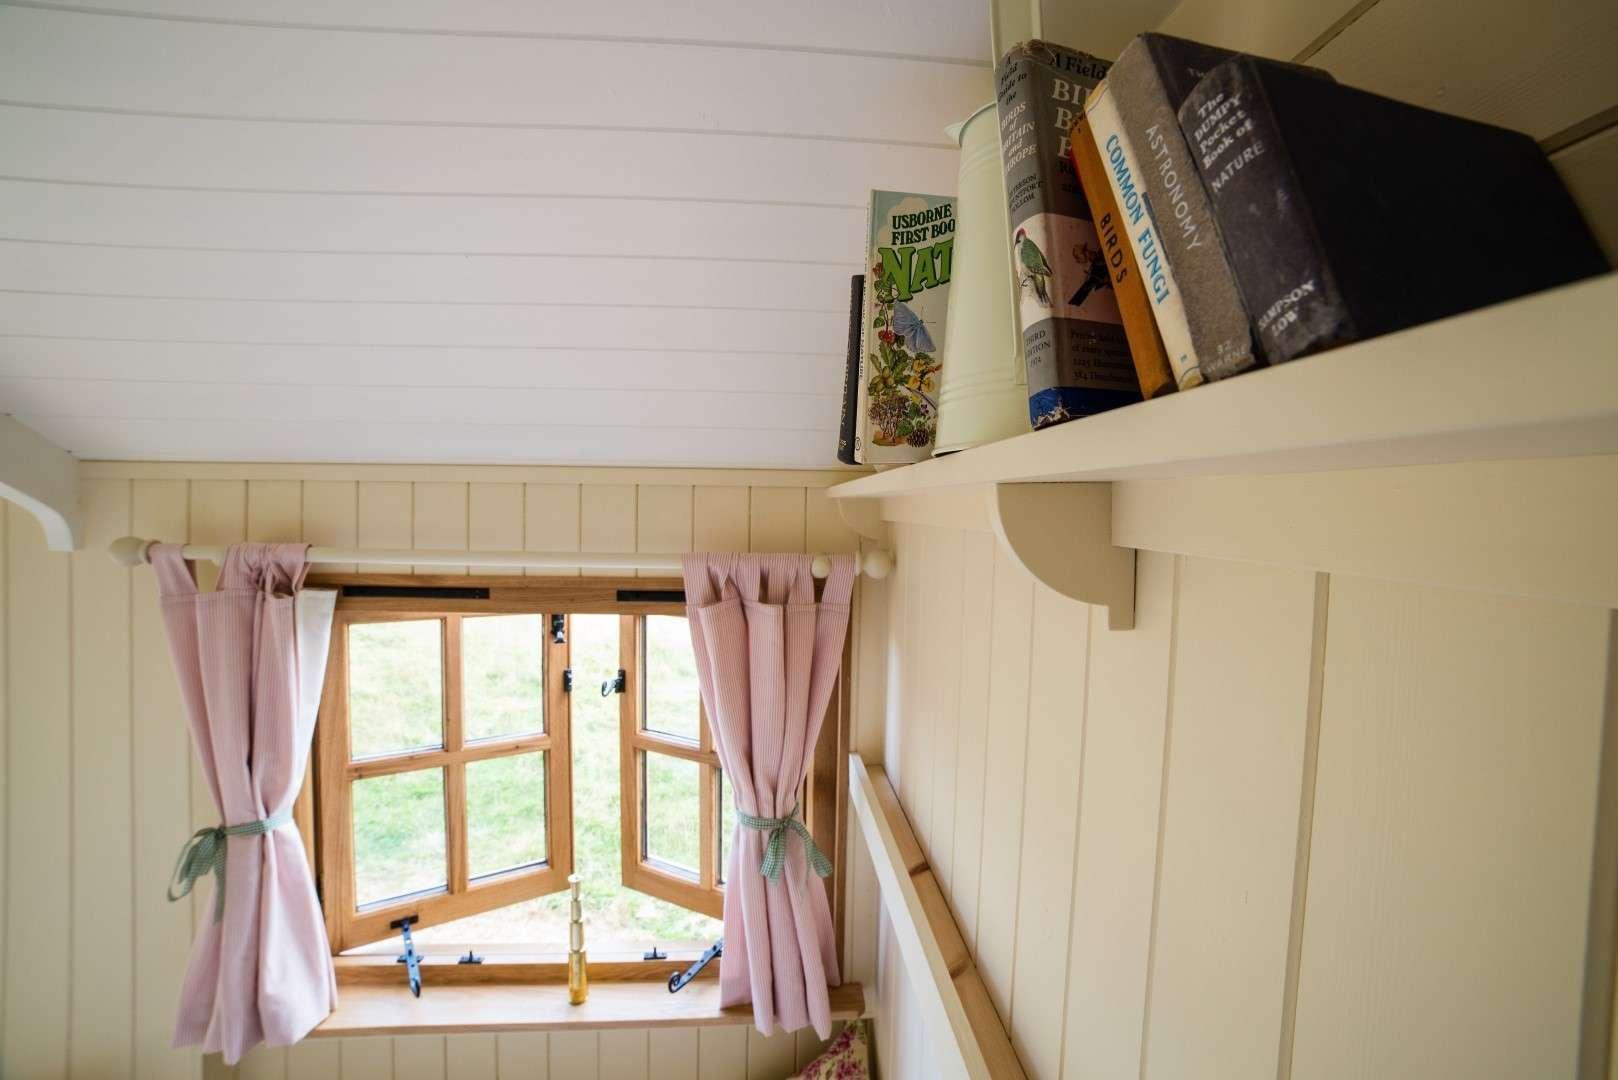 Samphire books and window